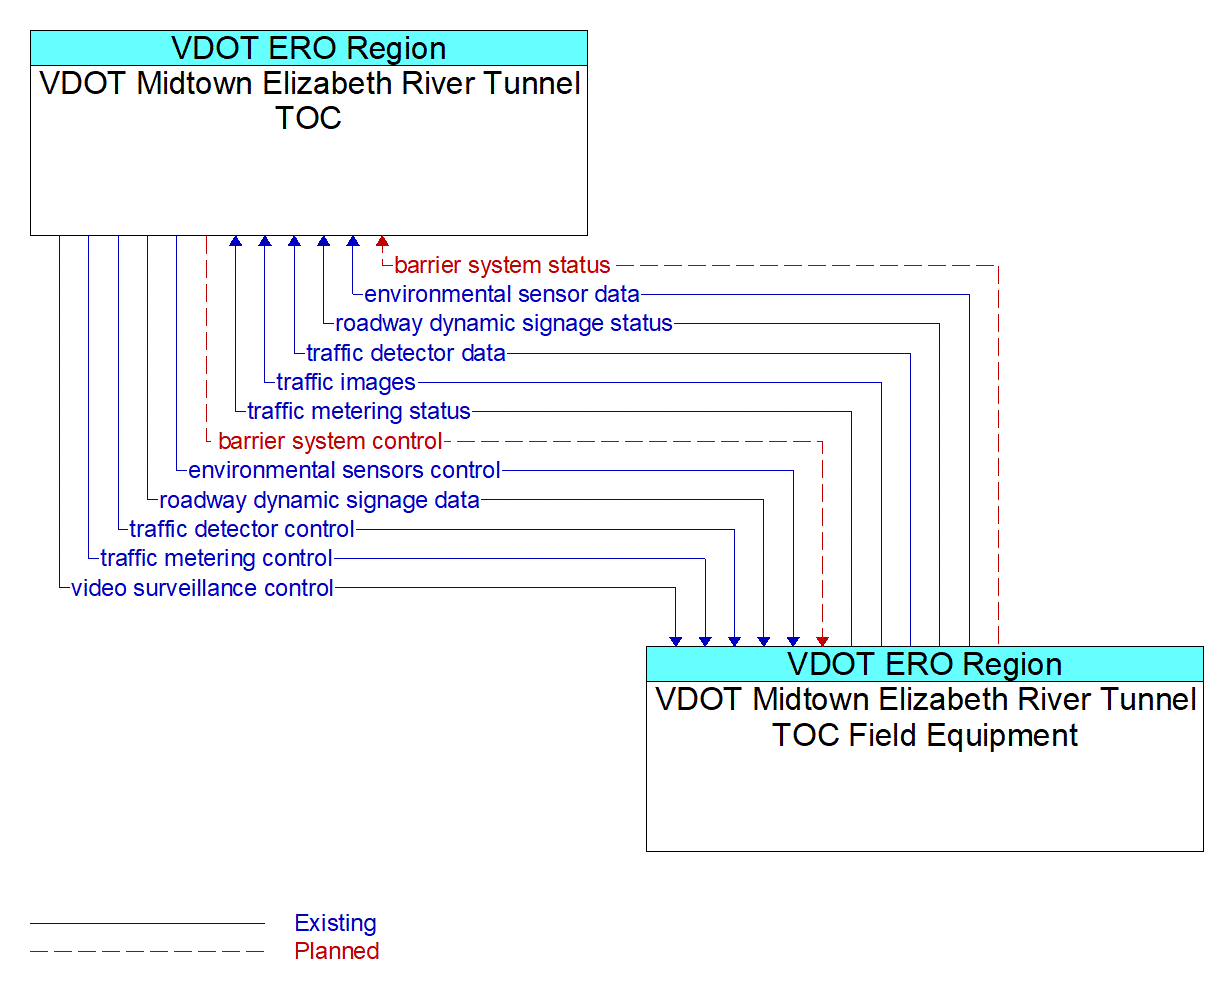 Architecture Flow Diagram: VDOT Midtown Elizabeth River Tunnel TOC Field Equipment <--> VDOT Midtown Elizabeth River Tunnel TOC